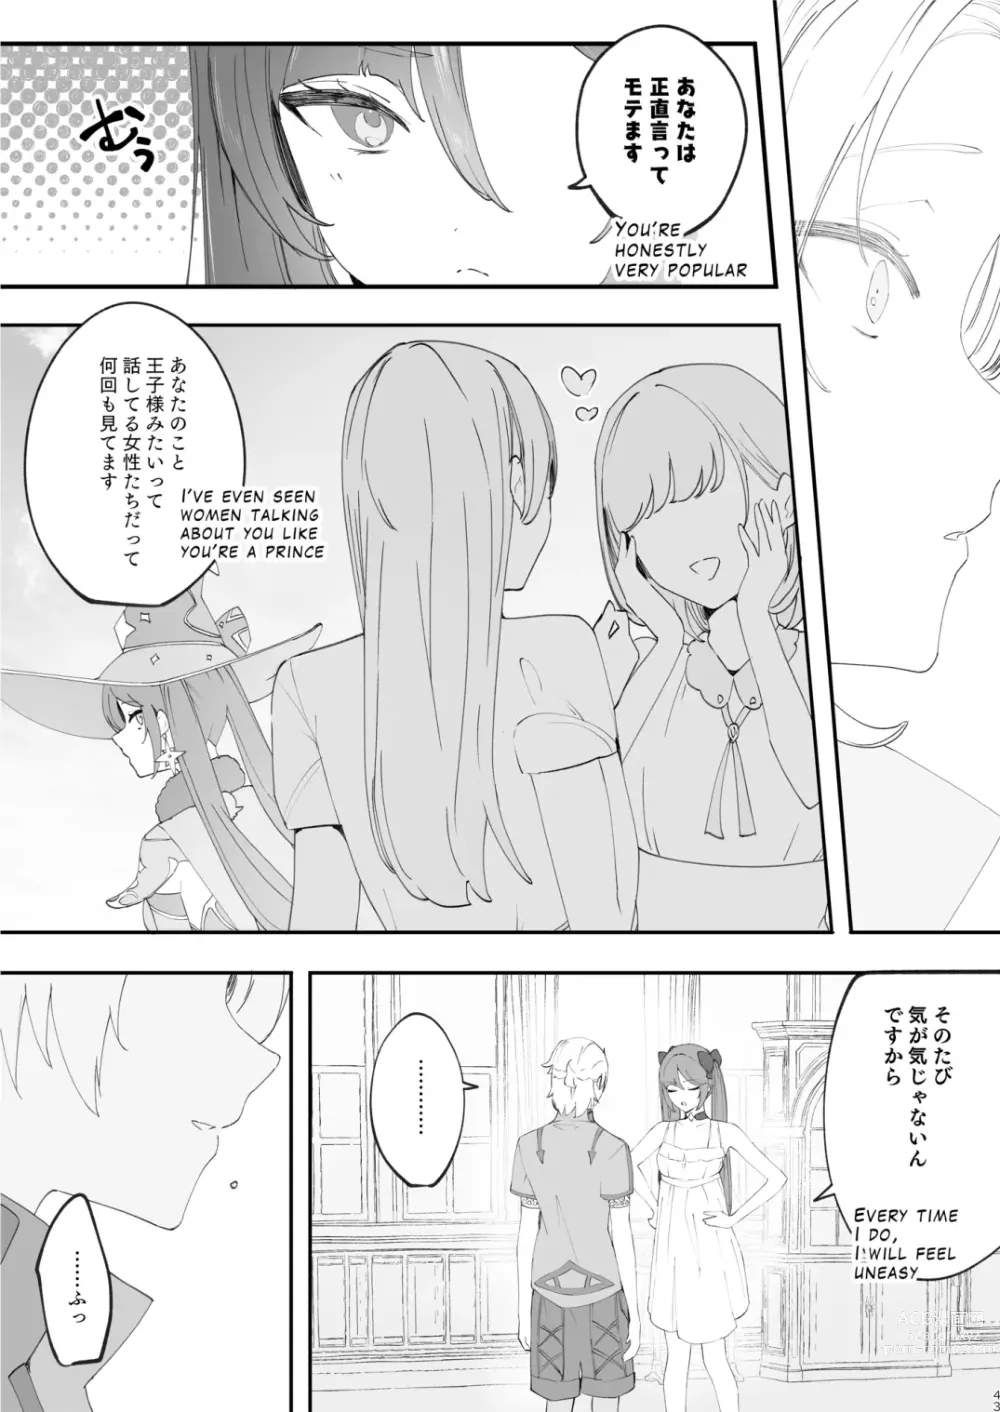 Page 42 of doujinshi Kimi wa Kawaii